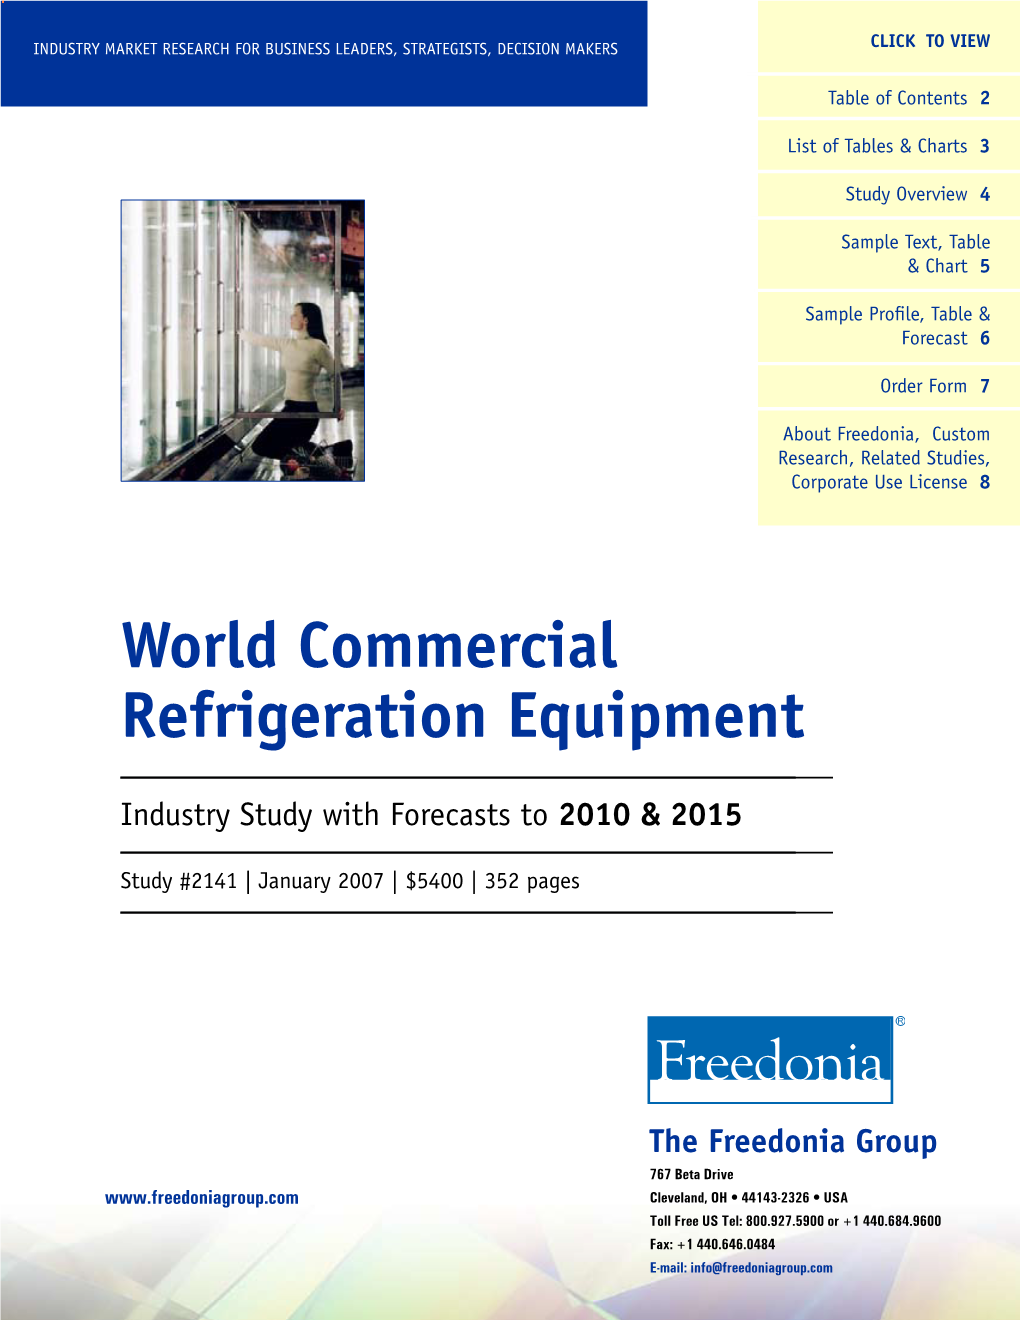 World Commercial Refrigeration Equipment